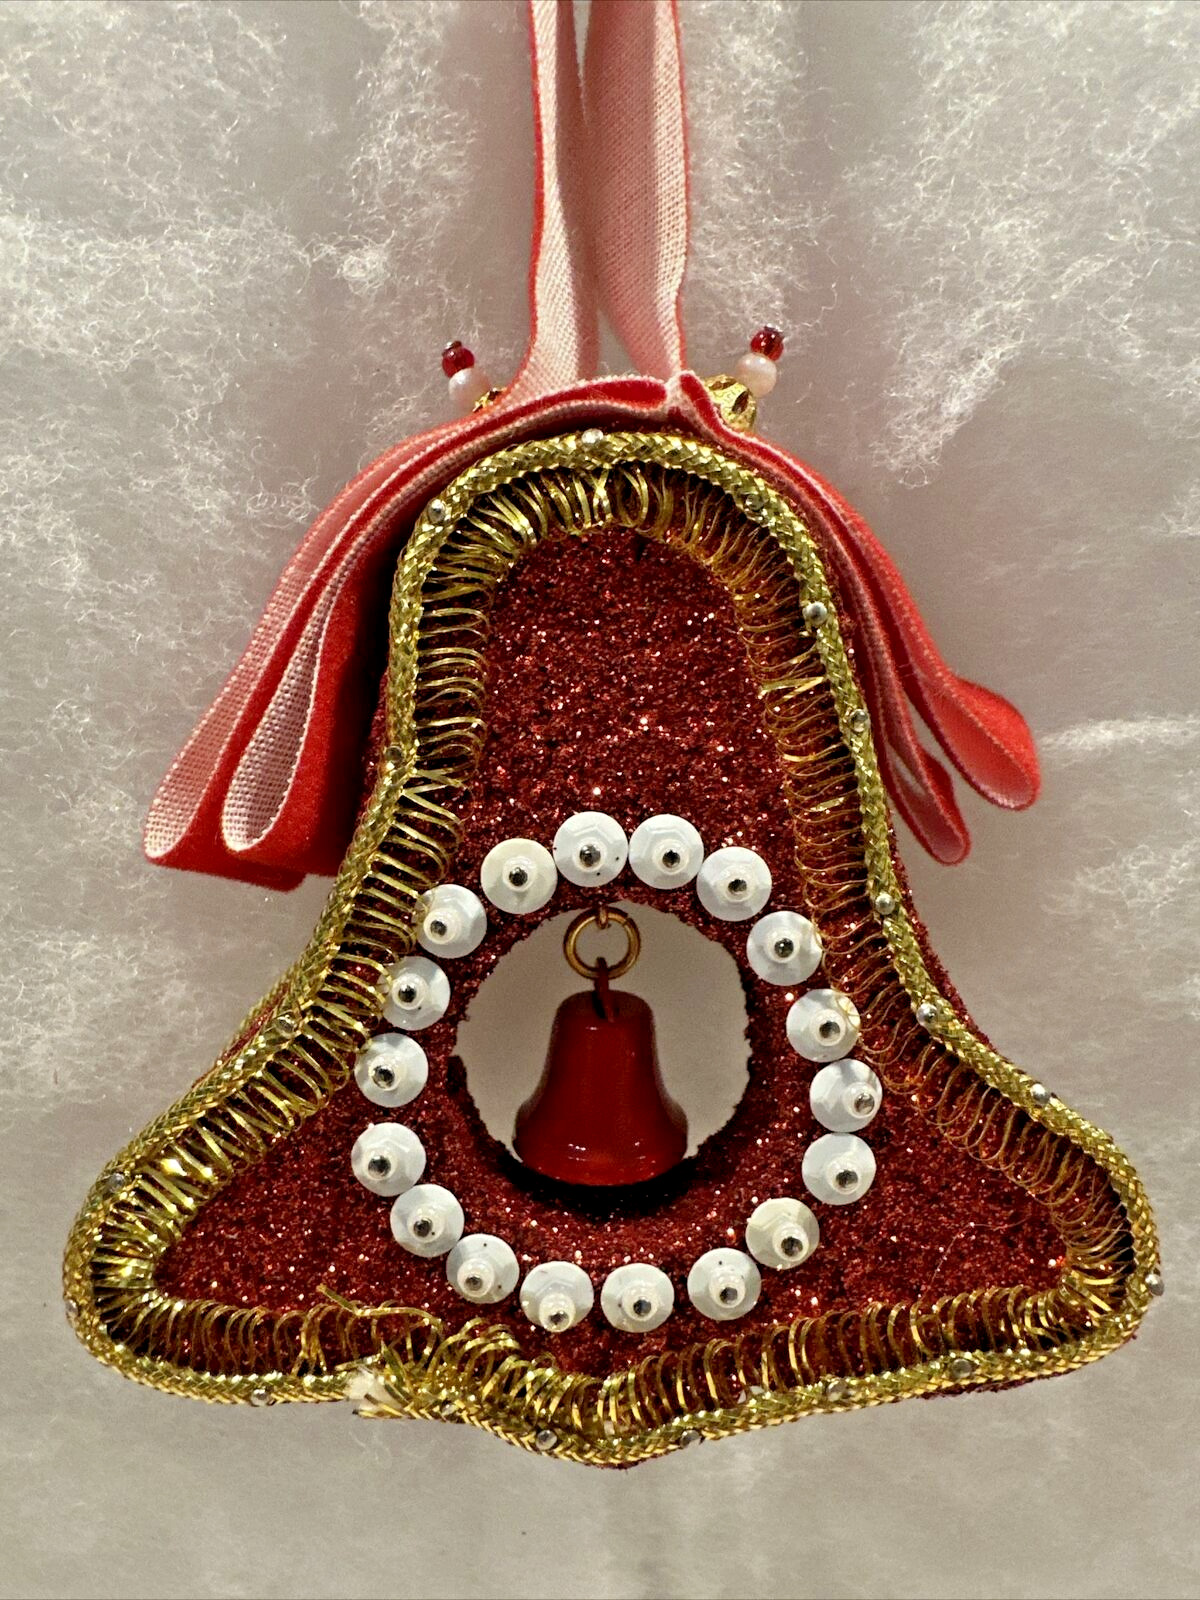 Vintage Push Pin Diorama Red Christmas Bell Ornament 3”x3” Ornate Handmade Nice